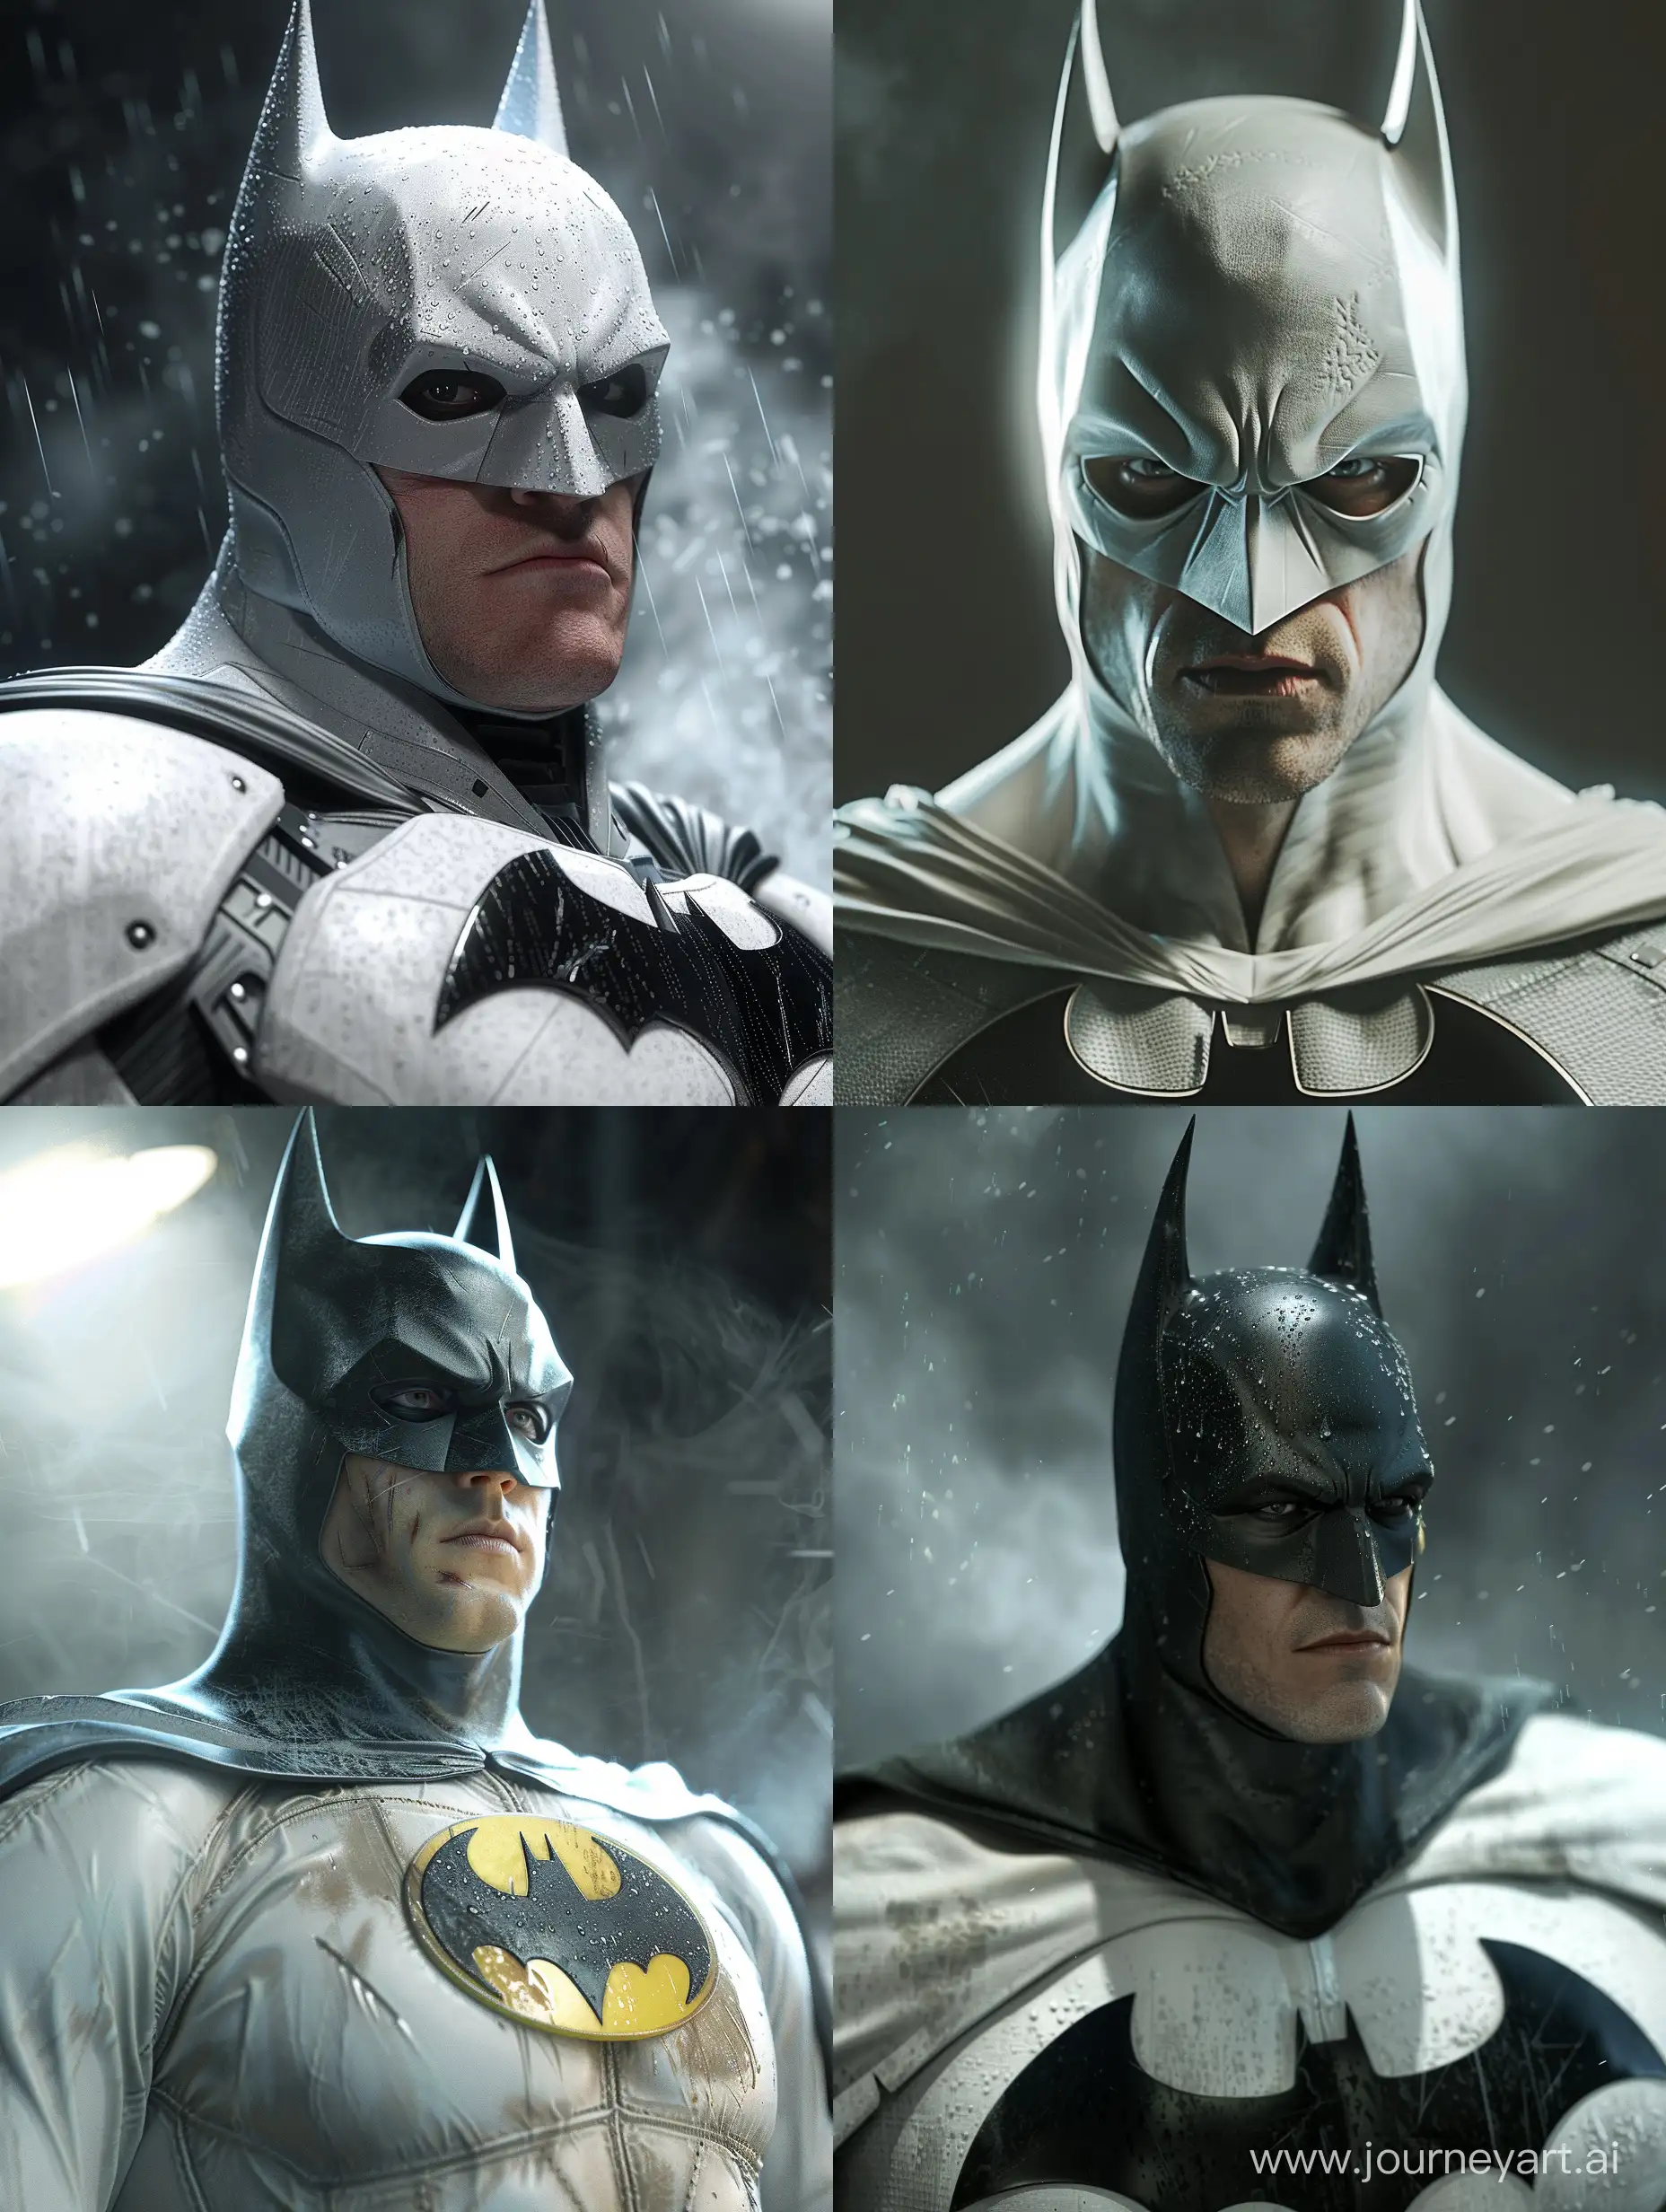 Christian-Bale-as-Batman-UltraRealistic-High-Resolution-Cinematic-Portrait